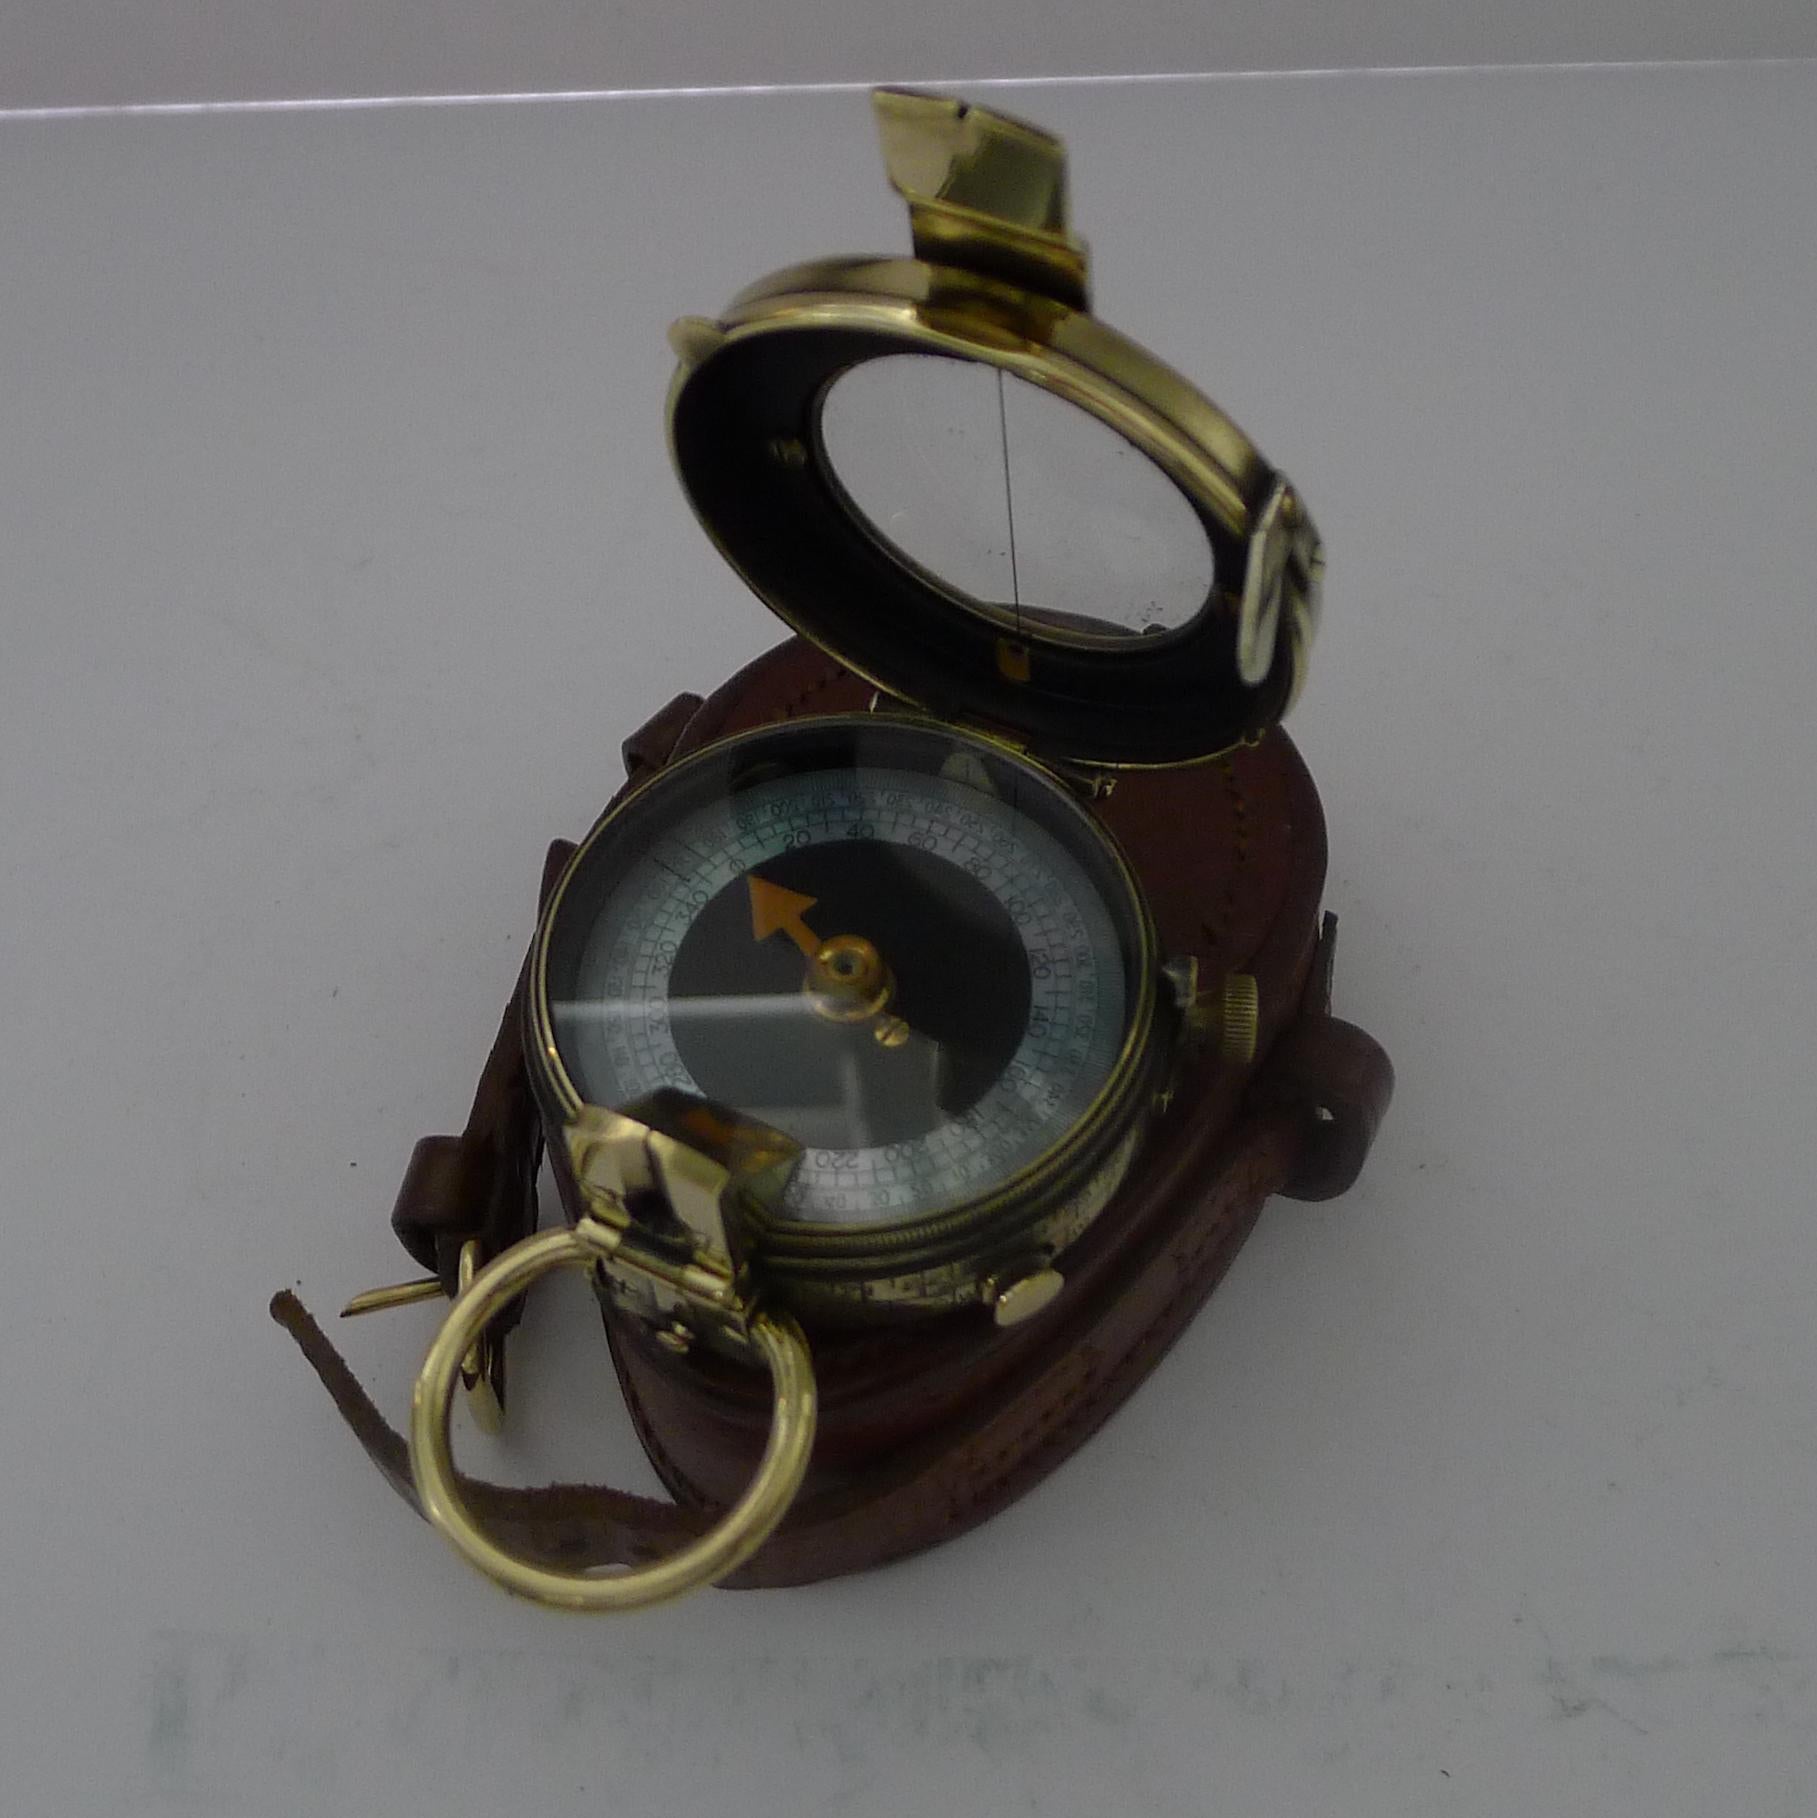 Brass WW1 1917 British Army Officer's Compass, Verner's Patent MK VIII by French Ltd